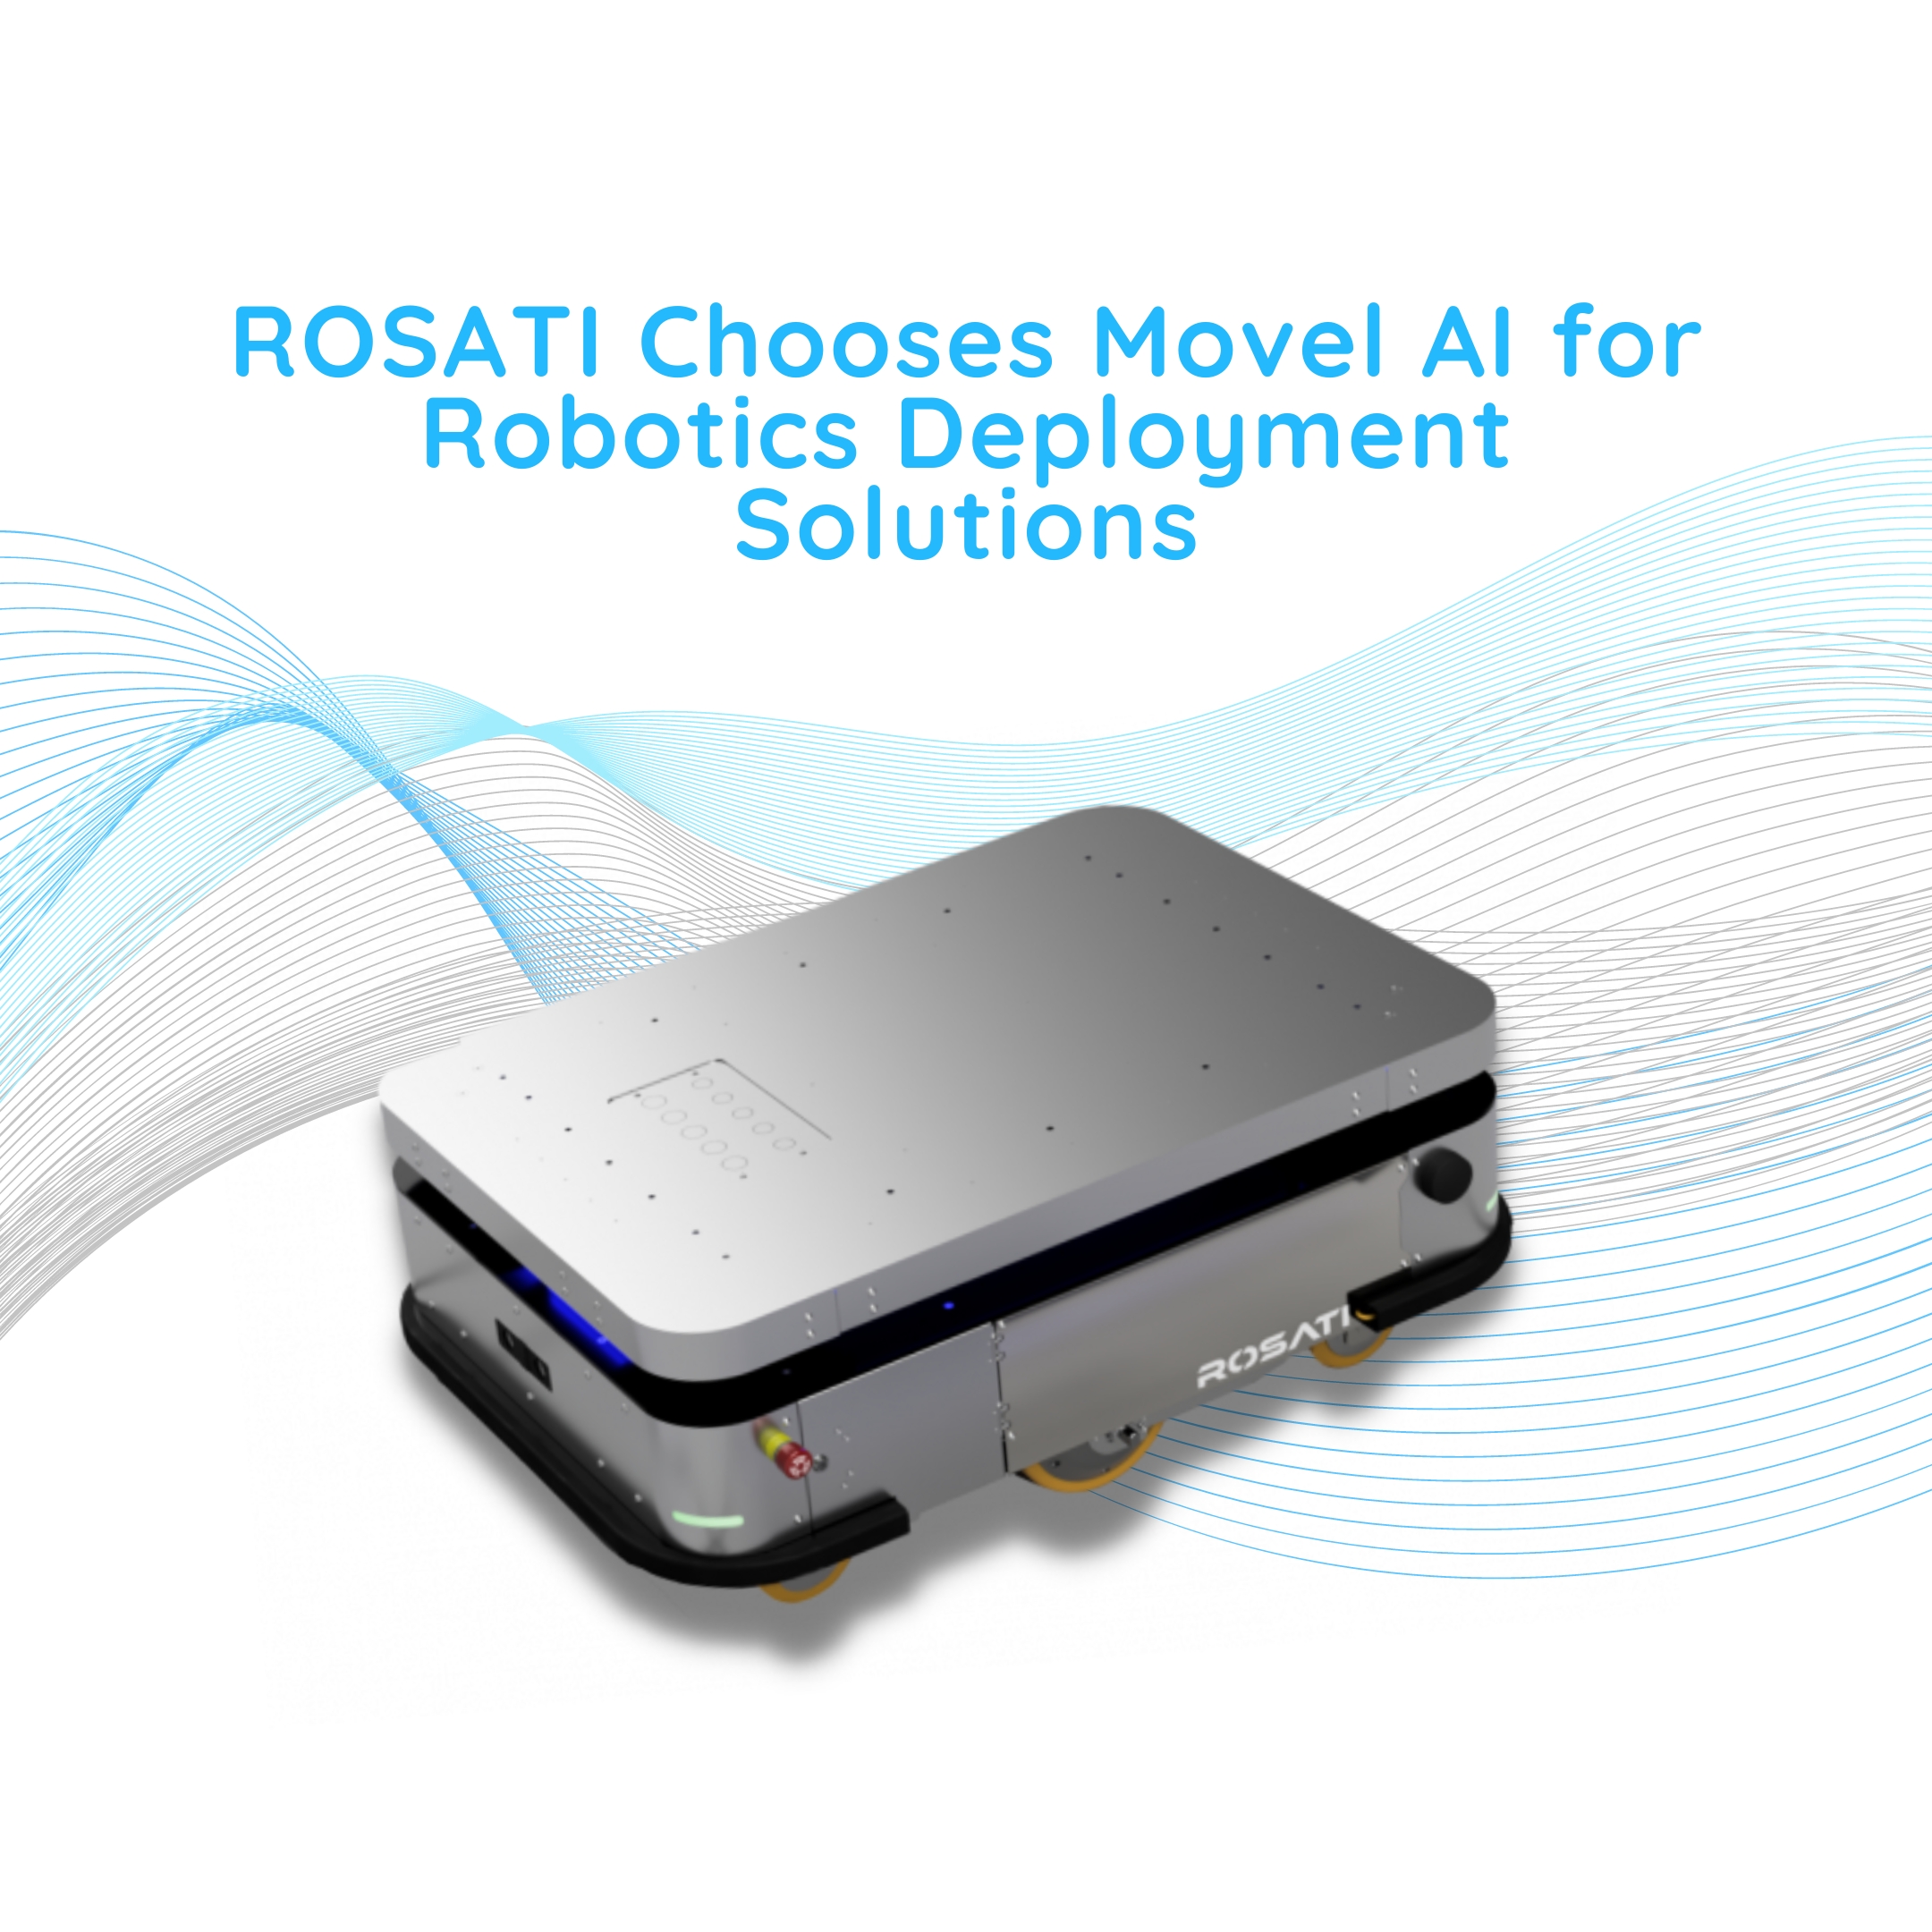 Movel AI Case study: Rosati, a Taiwan-based robot manufacturer company